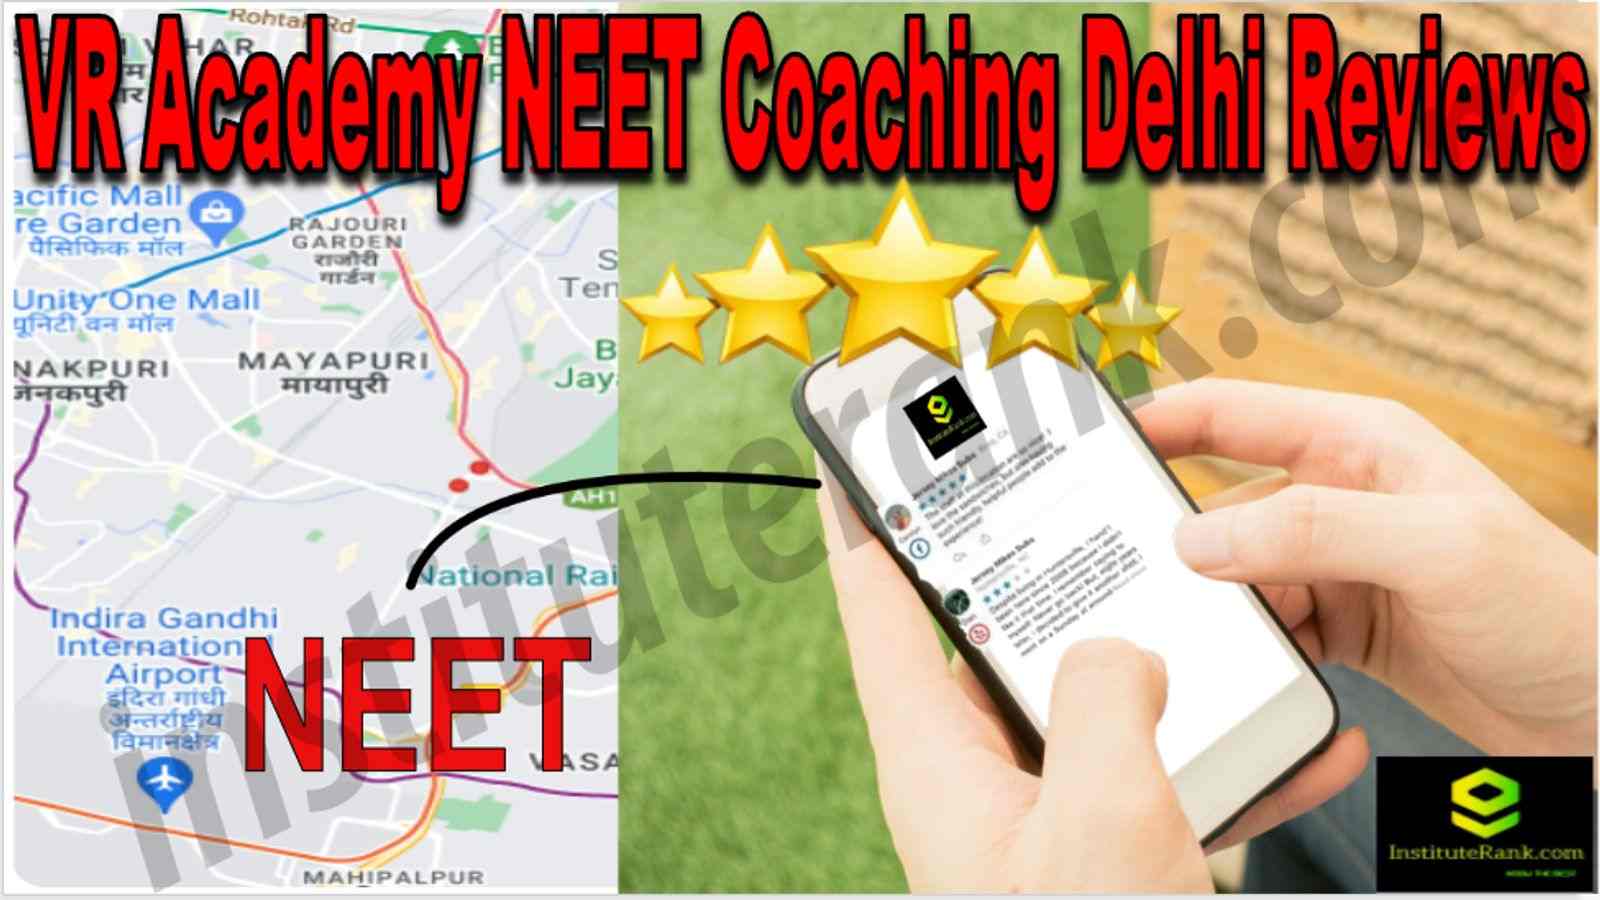 VR Academy Neet Coaching Delhi Reviews